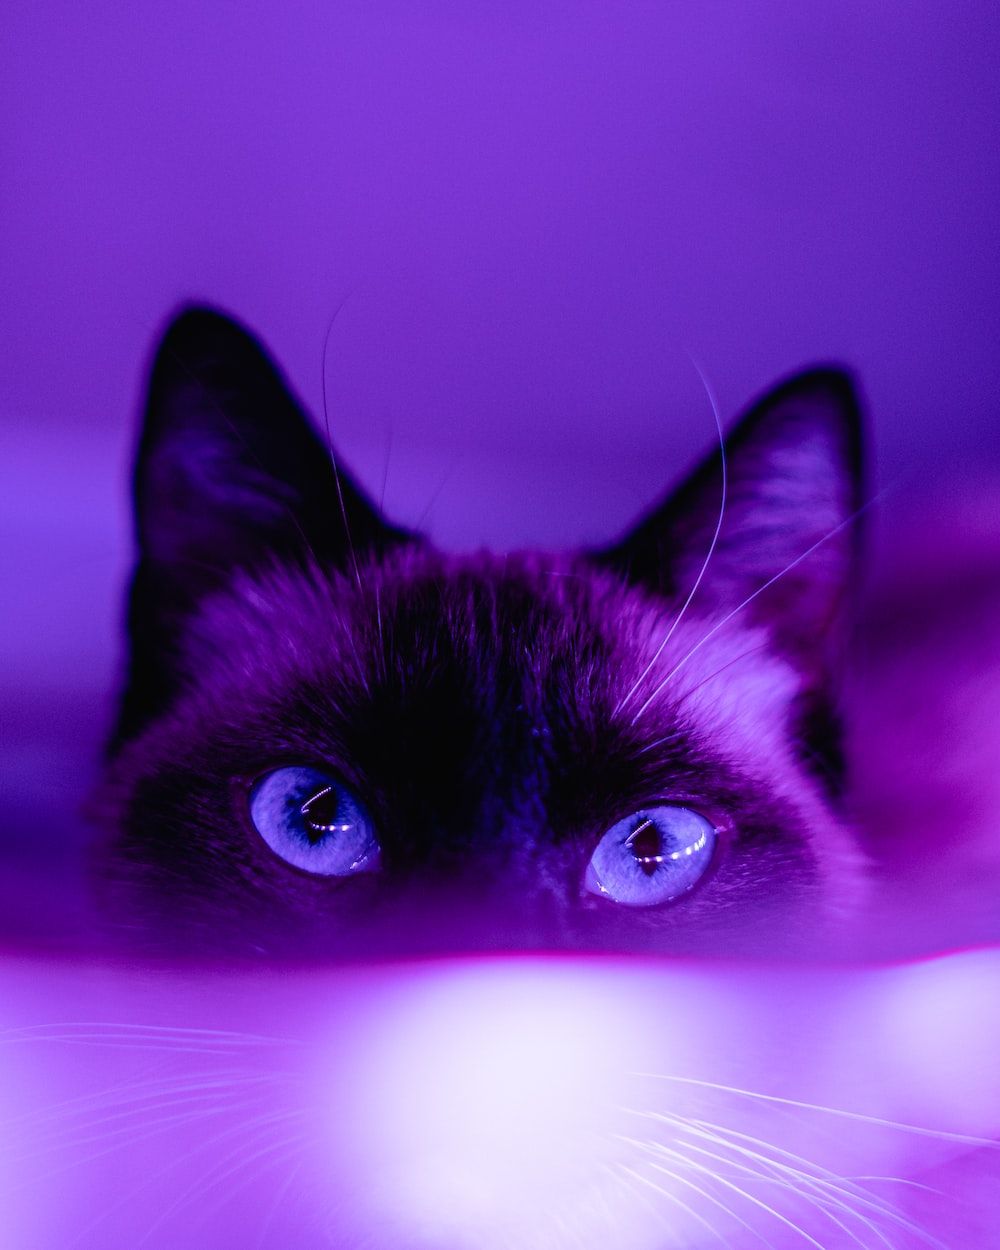 A cat is looking out of the water - Purple, cute purple, dark purple, cat